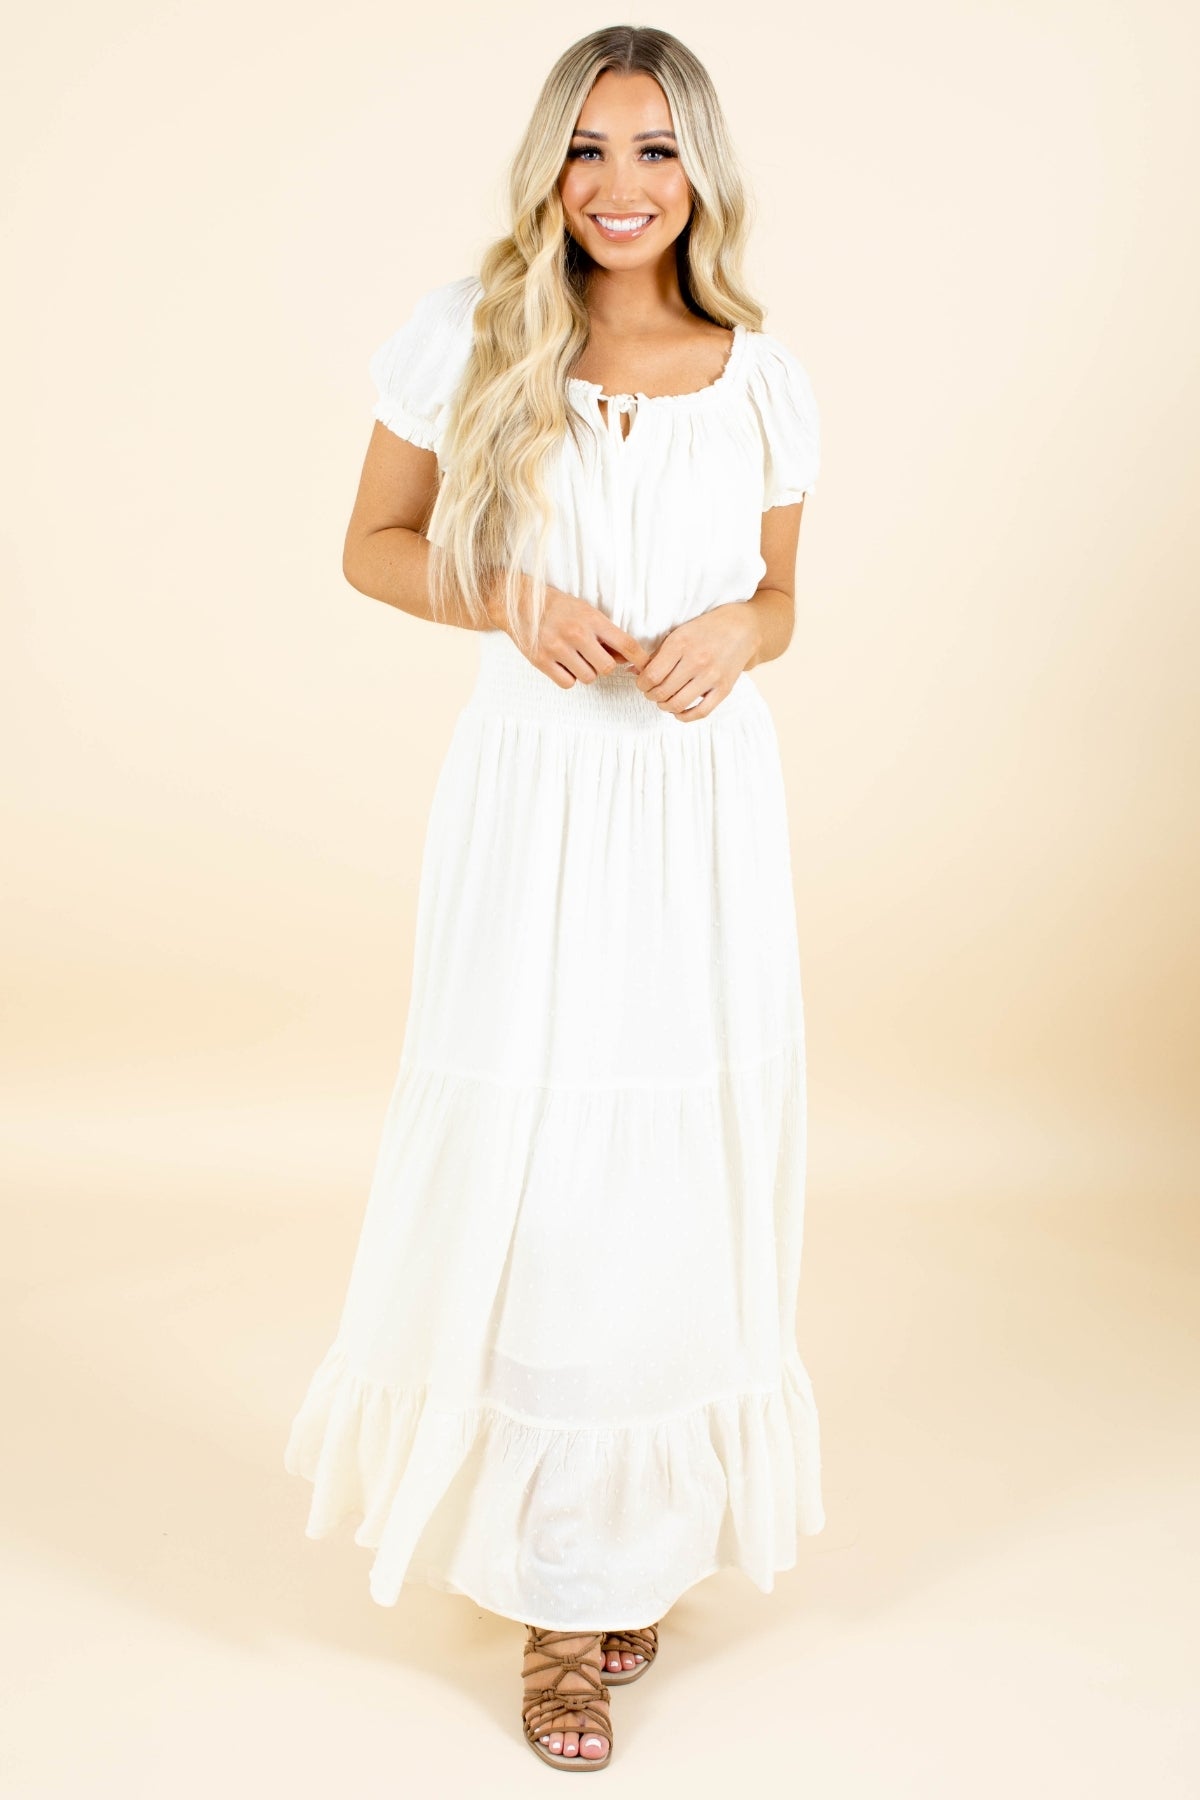 White Boutique Dress